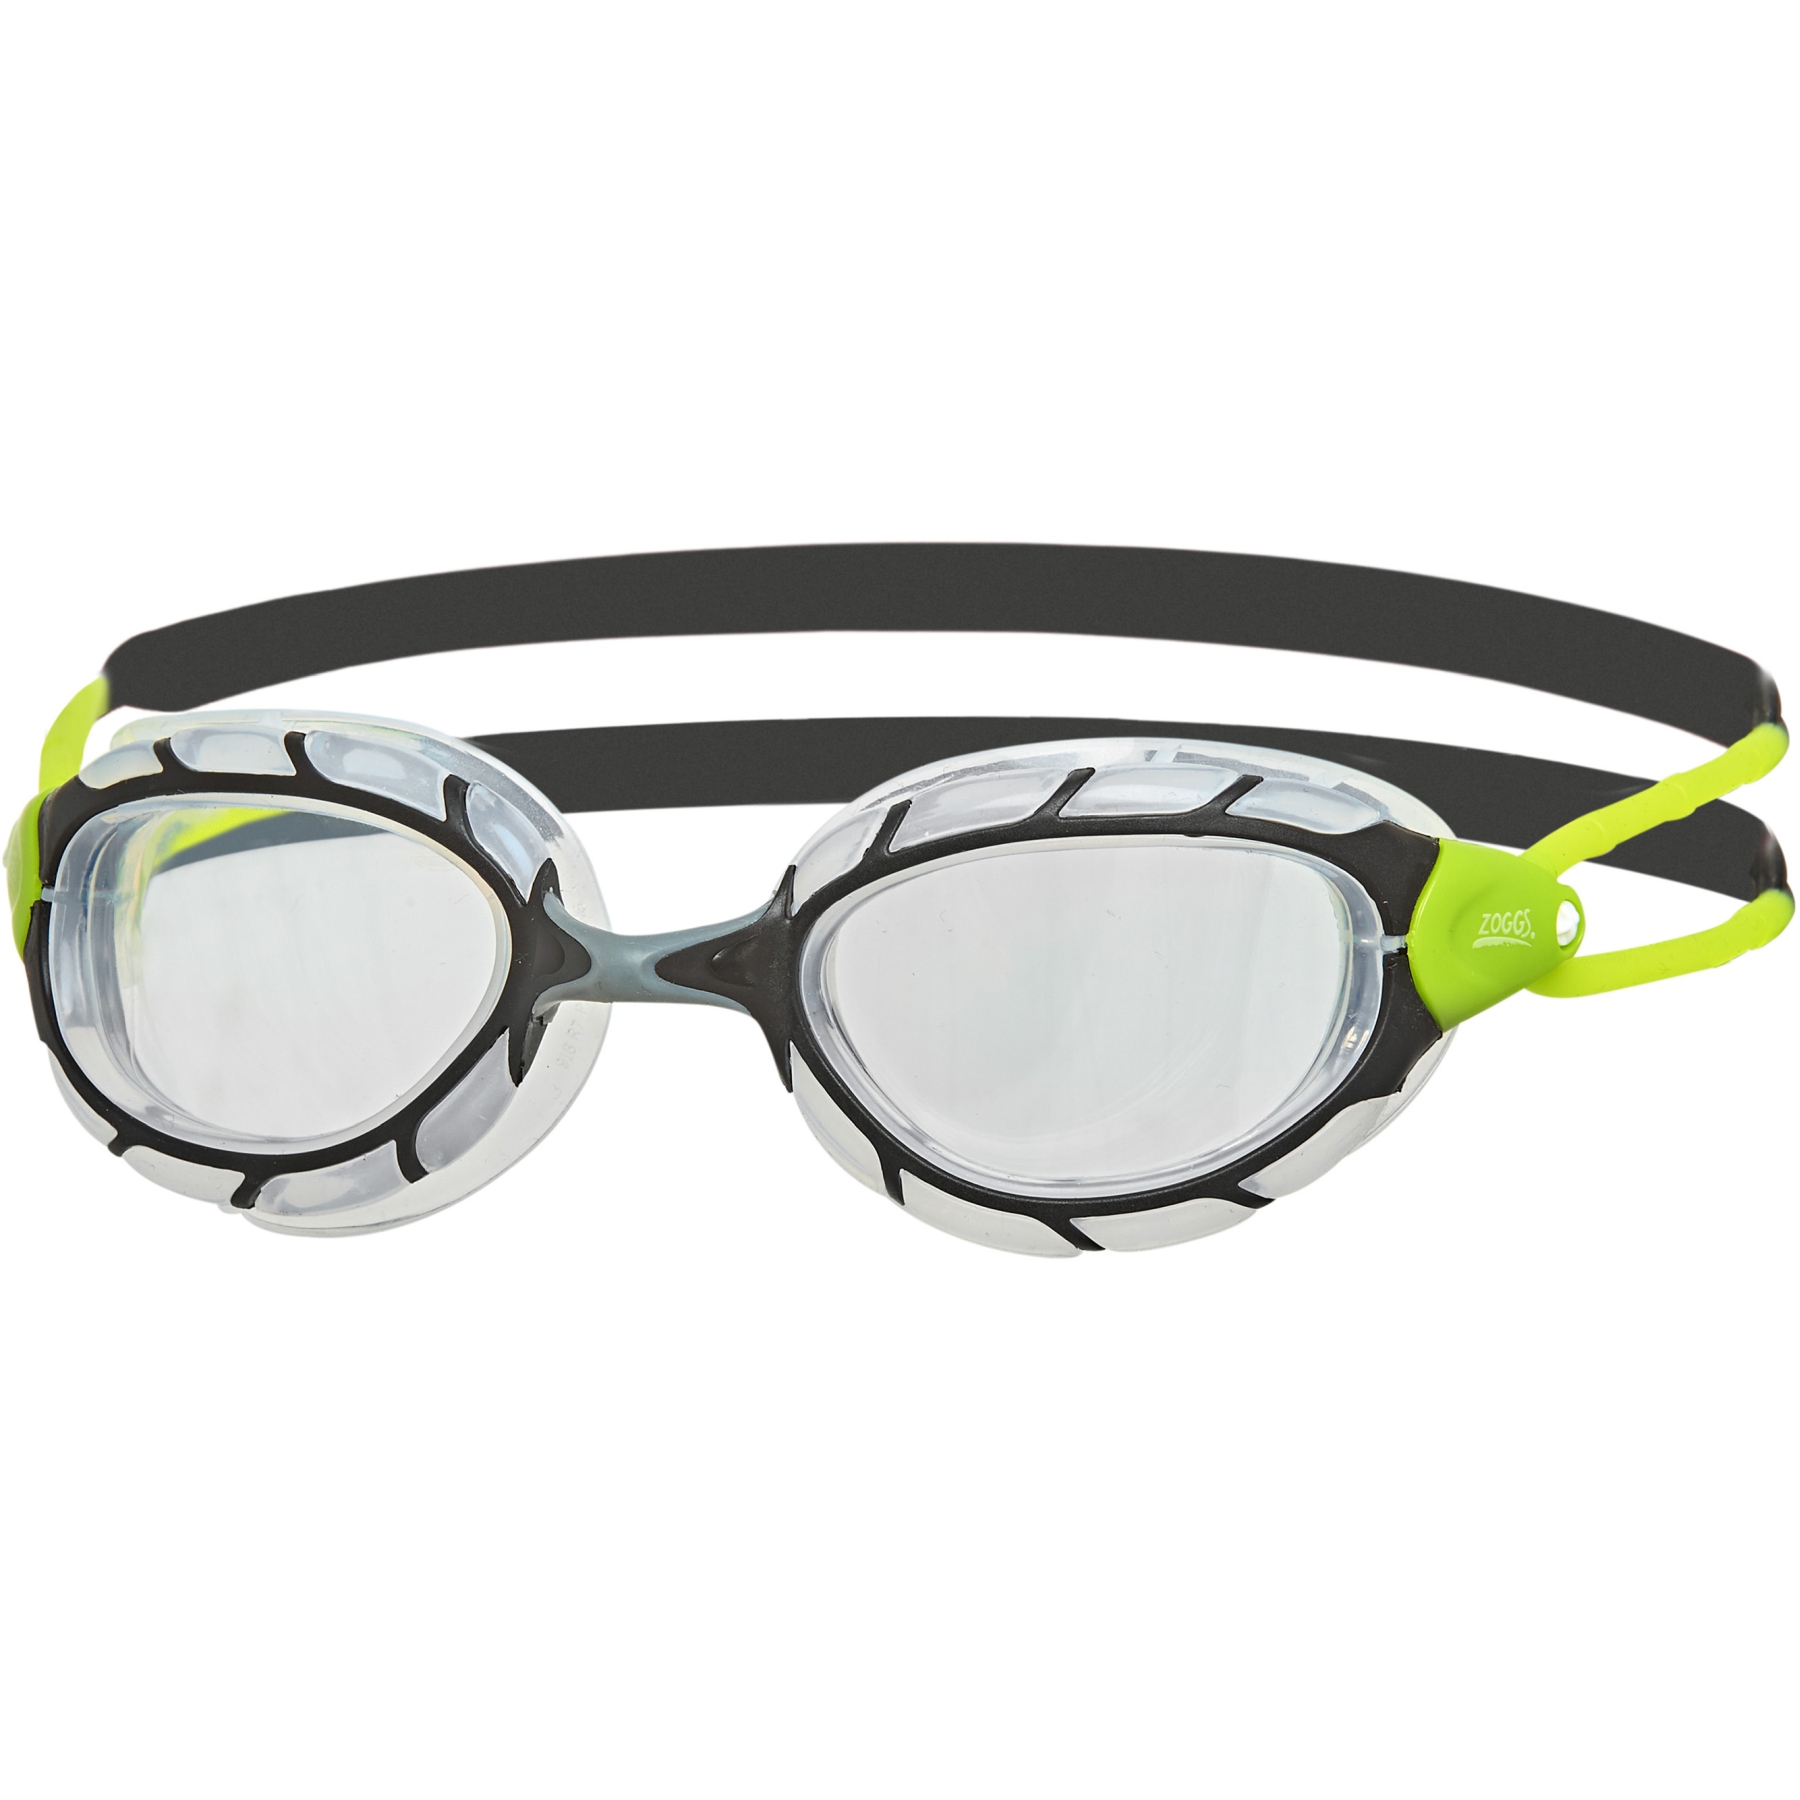 Productfoto van Zoggs Predator Swimming Goggles - Clear Lenses - Regular Fit - green/clear